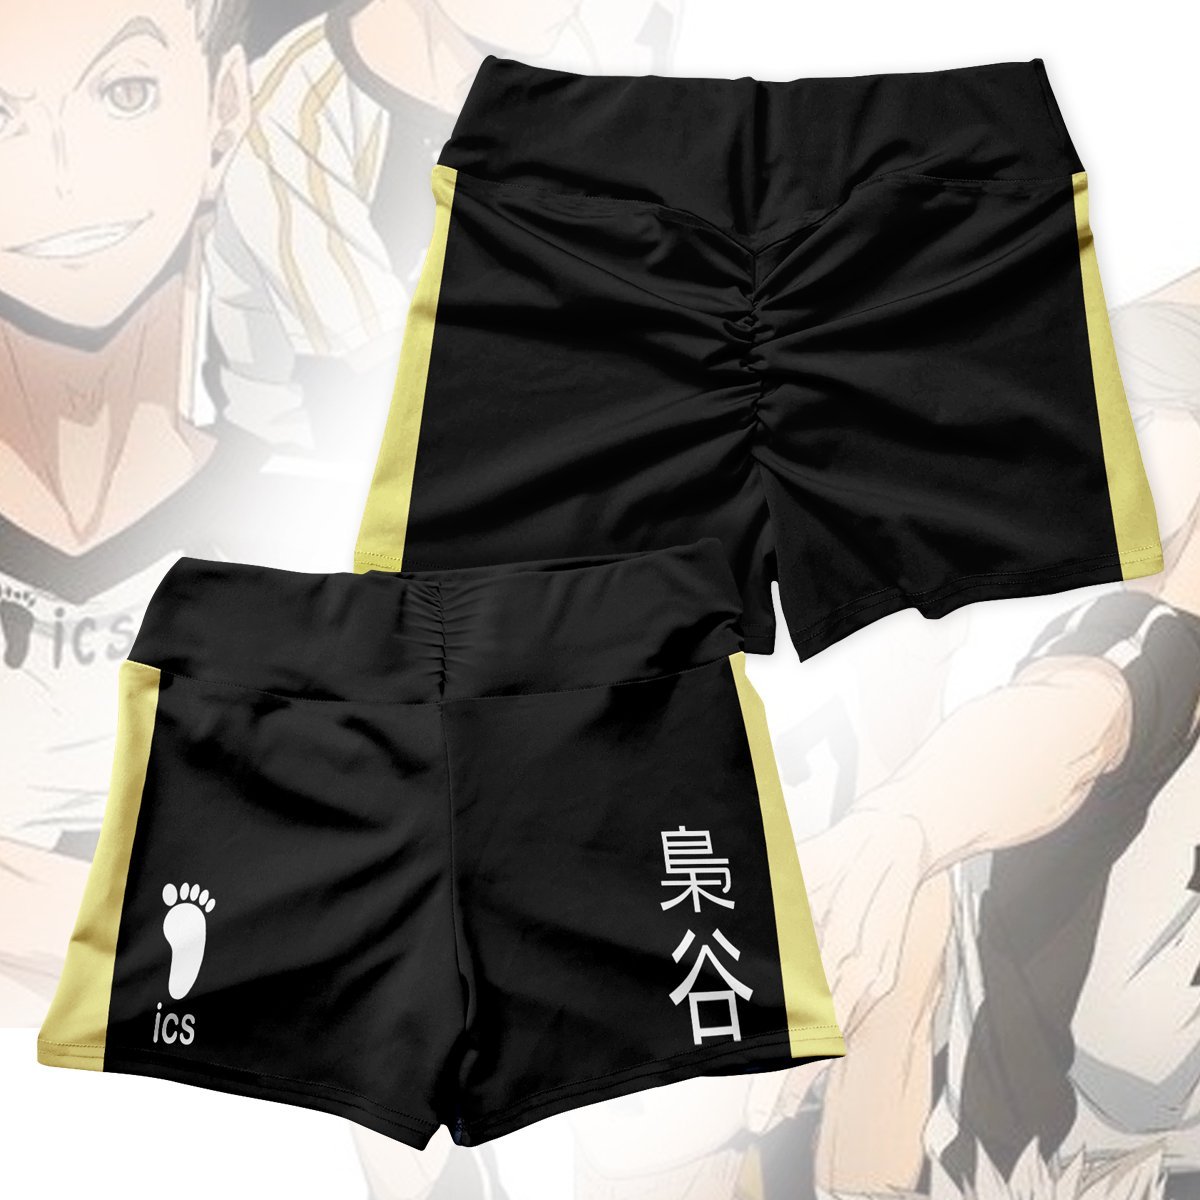 team fukurodani active wear set 672551 - Anime Swimsuits